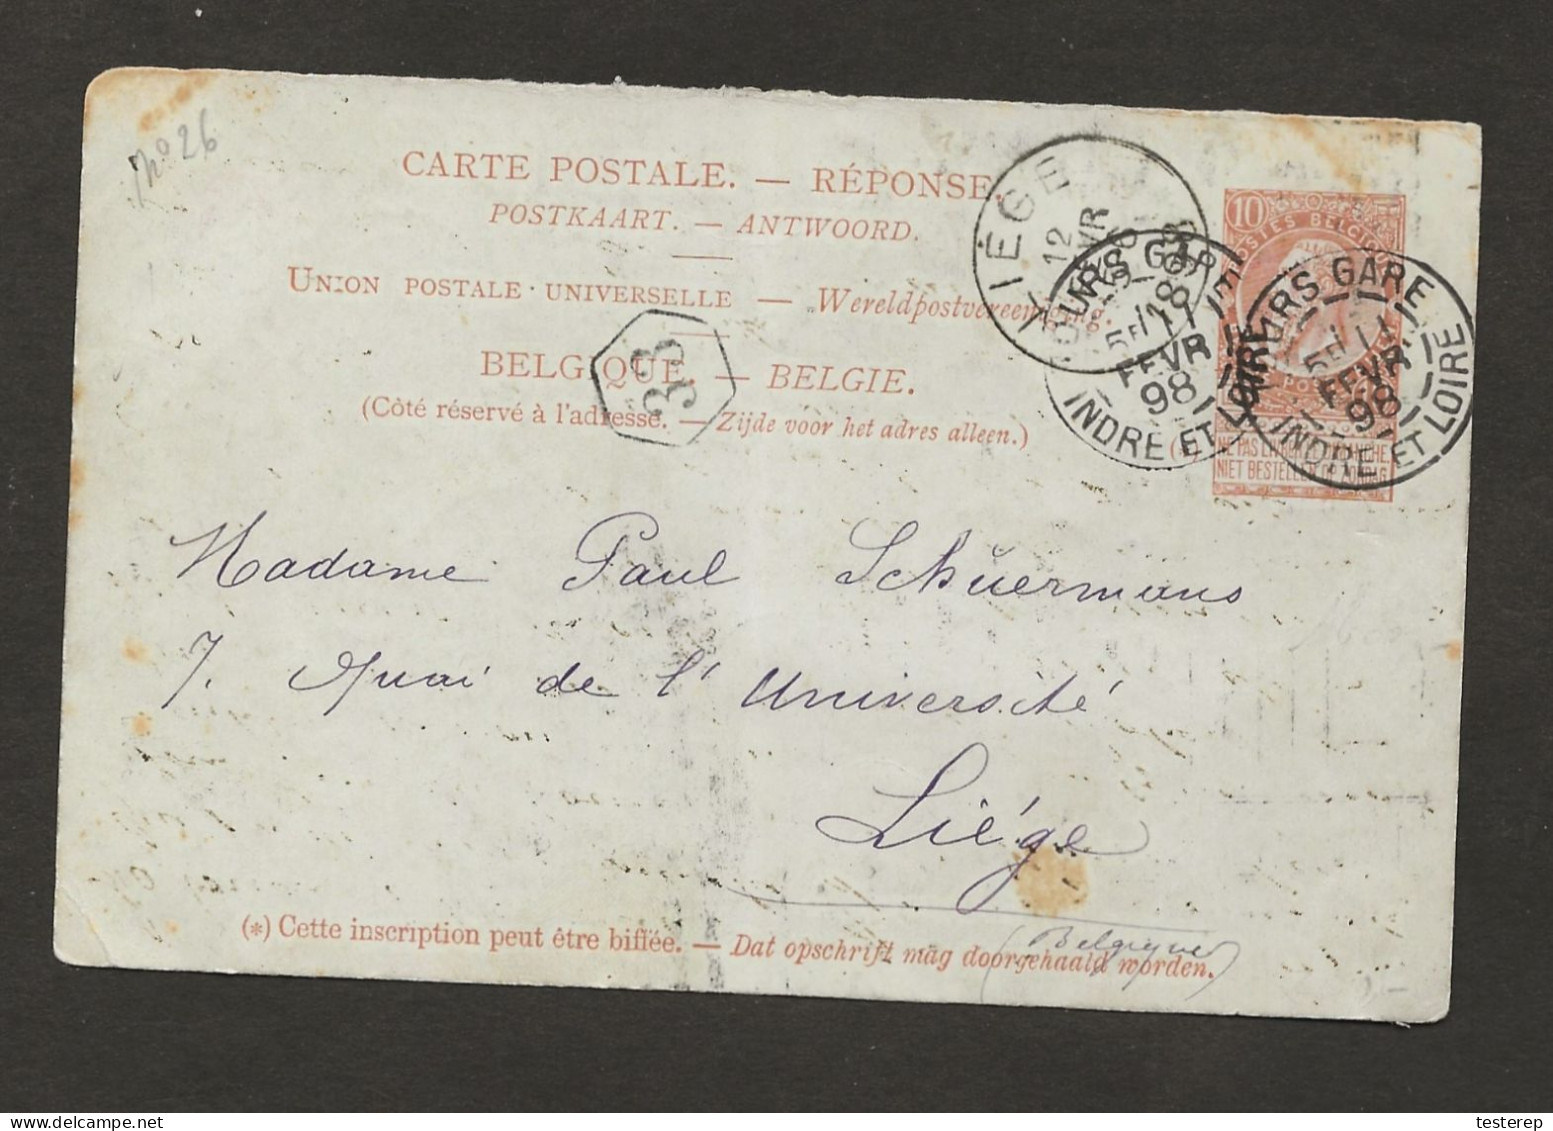 CARTE POSTALE 10 Ct Brun Réponse De France 1898 Vers Liège - Antwoord-betaald Briefkaarten